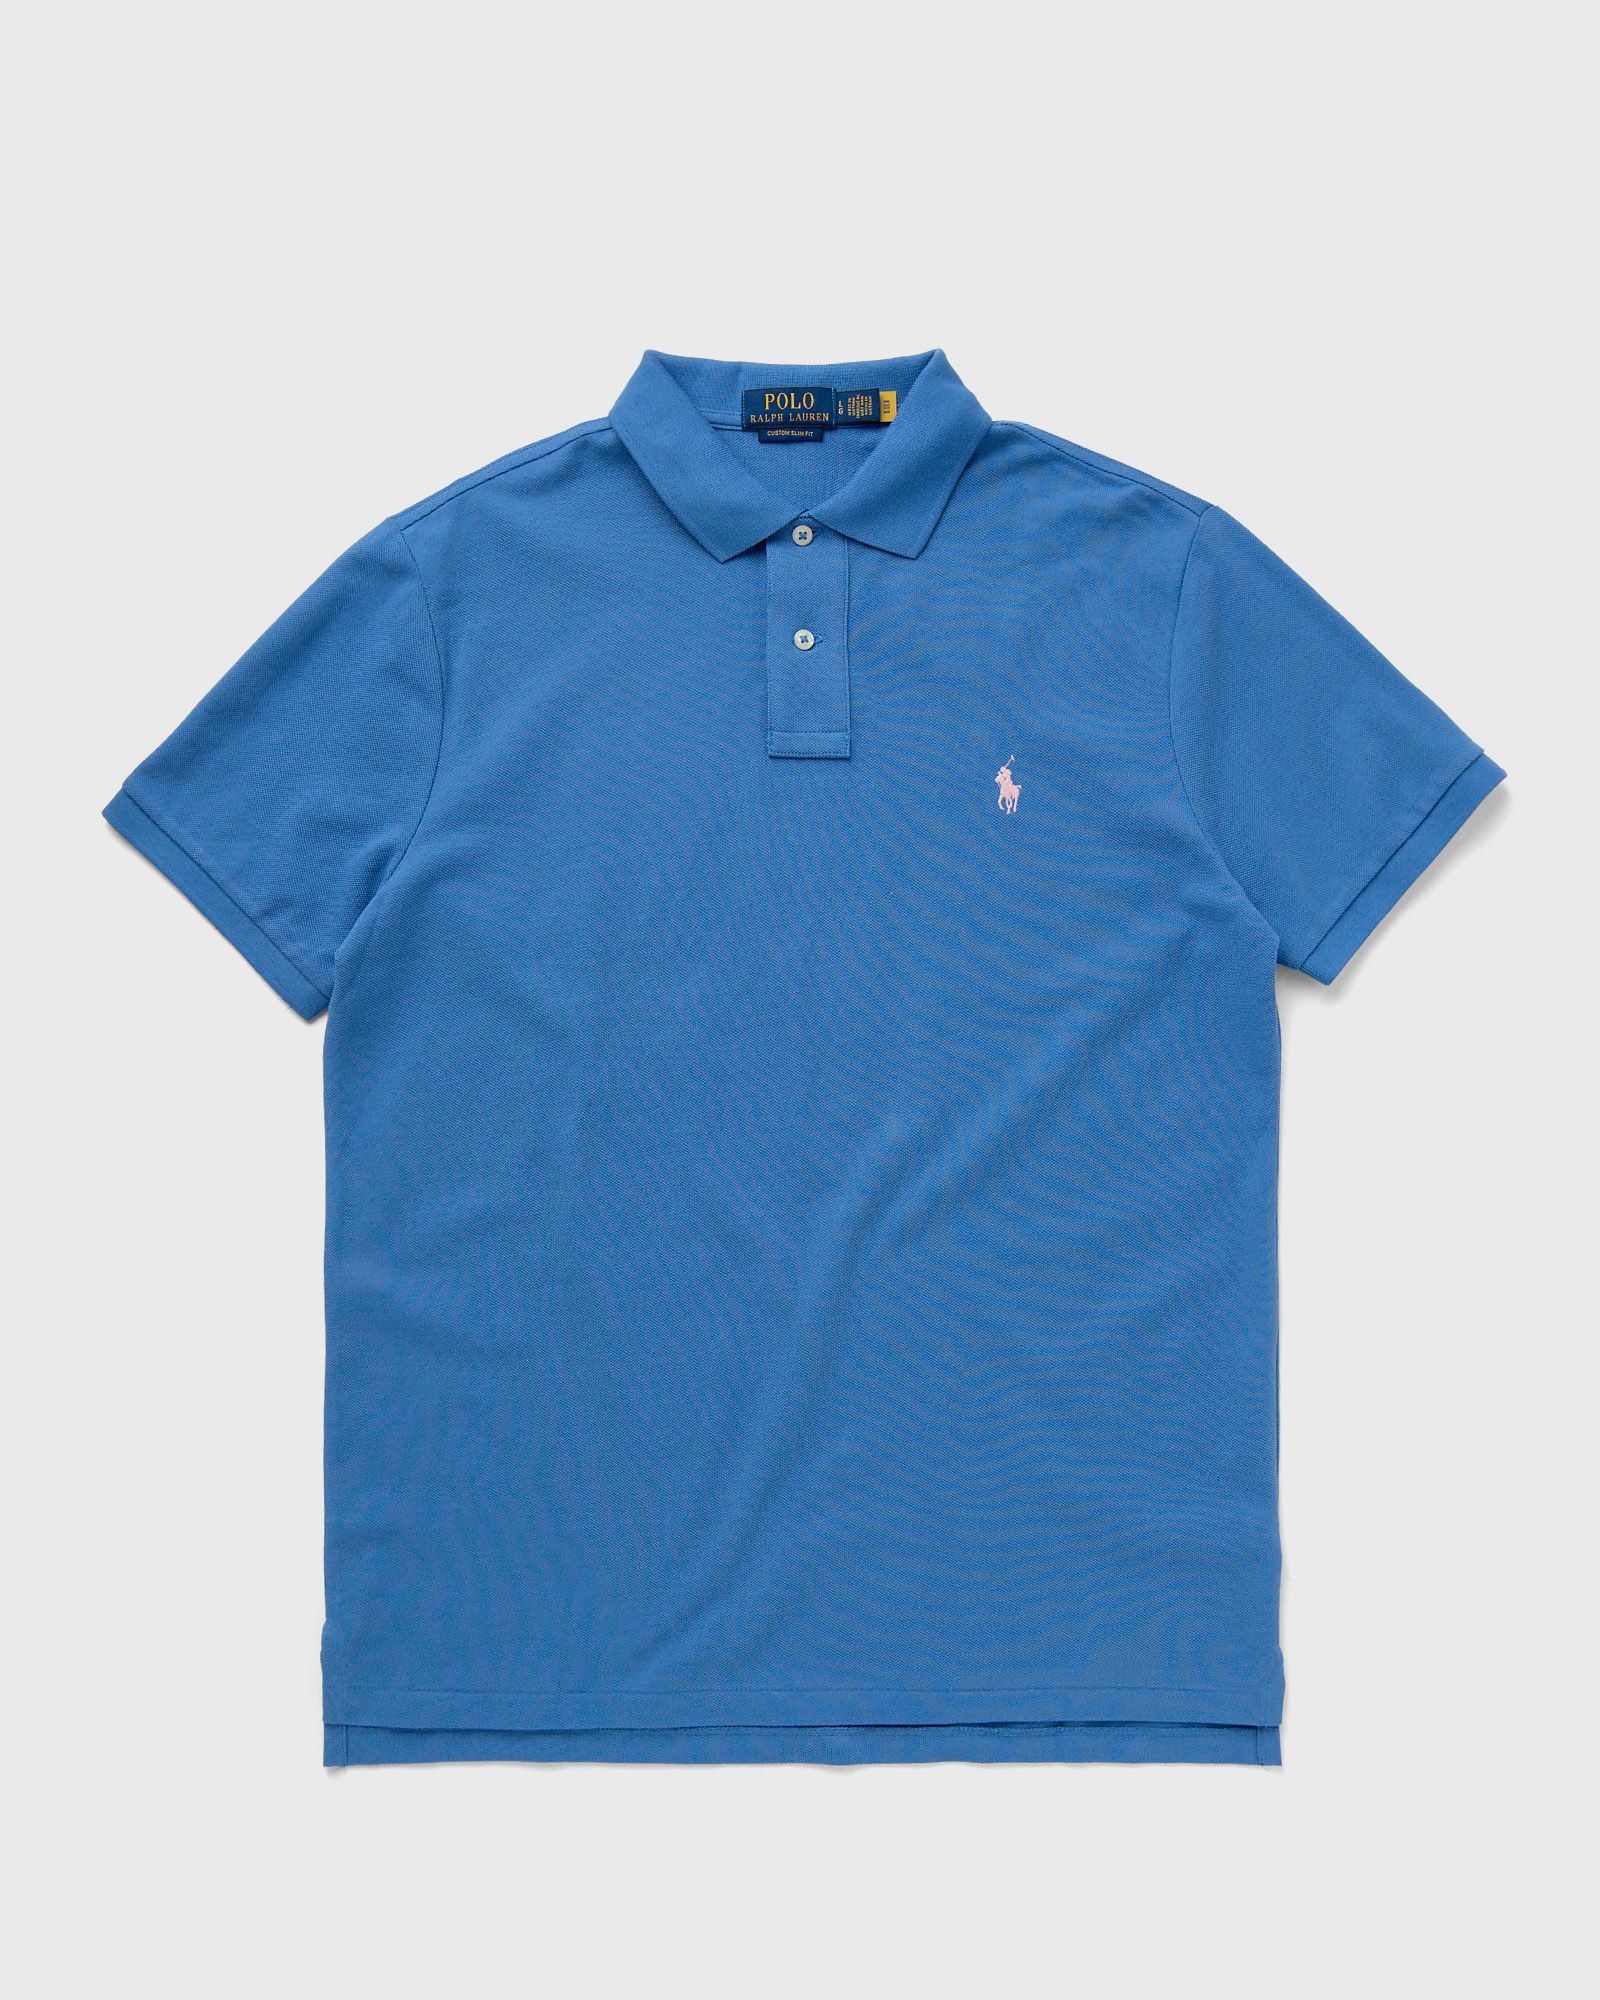 Polo Ralph Lauren - short sleeve-knit men polos blue in größe:xxl